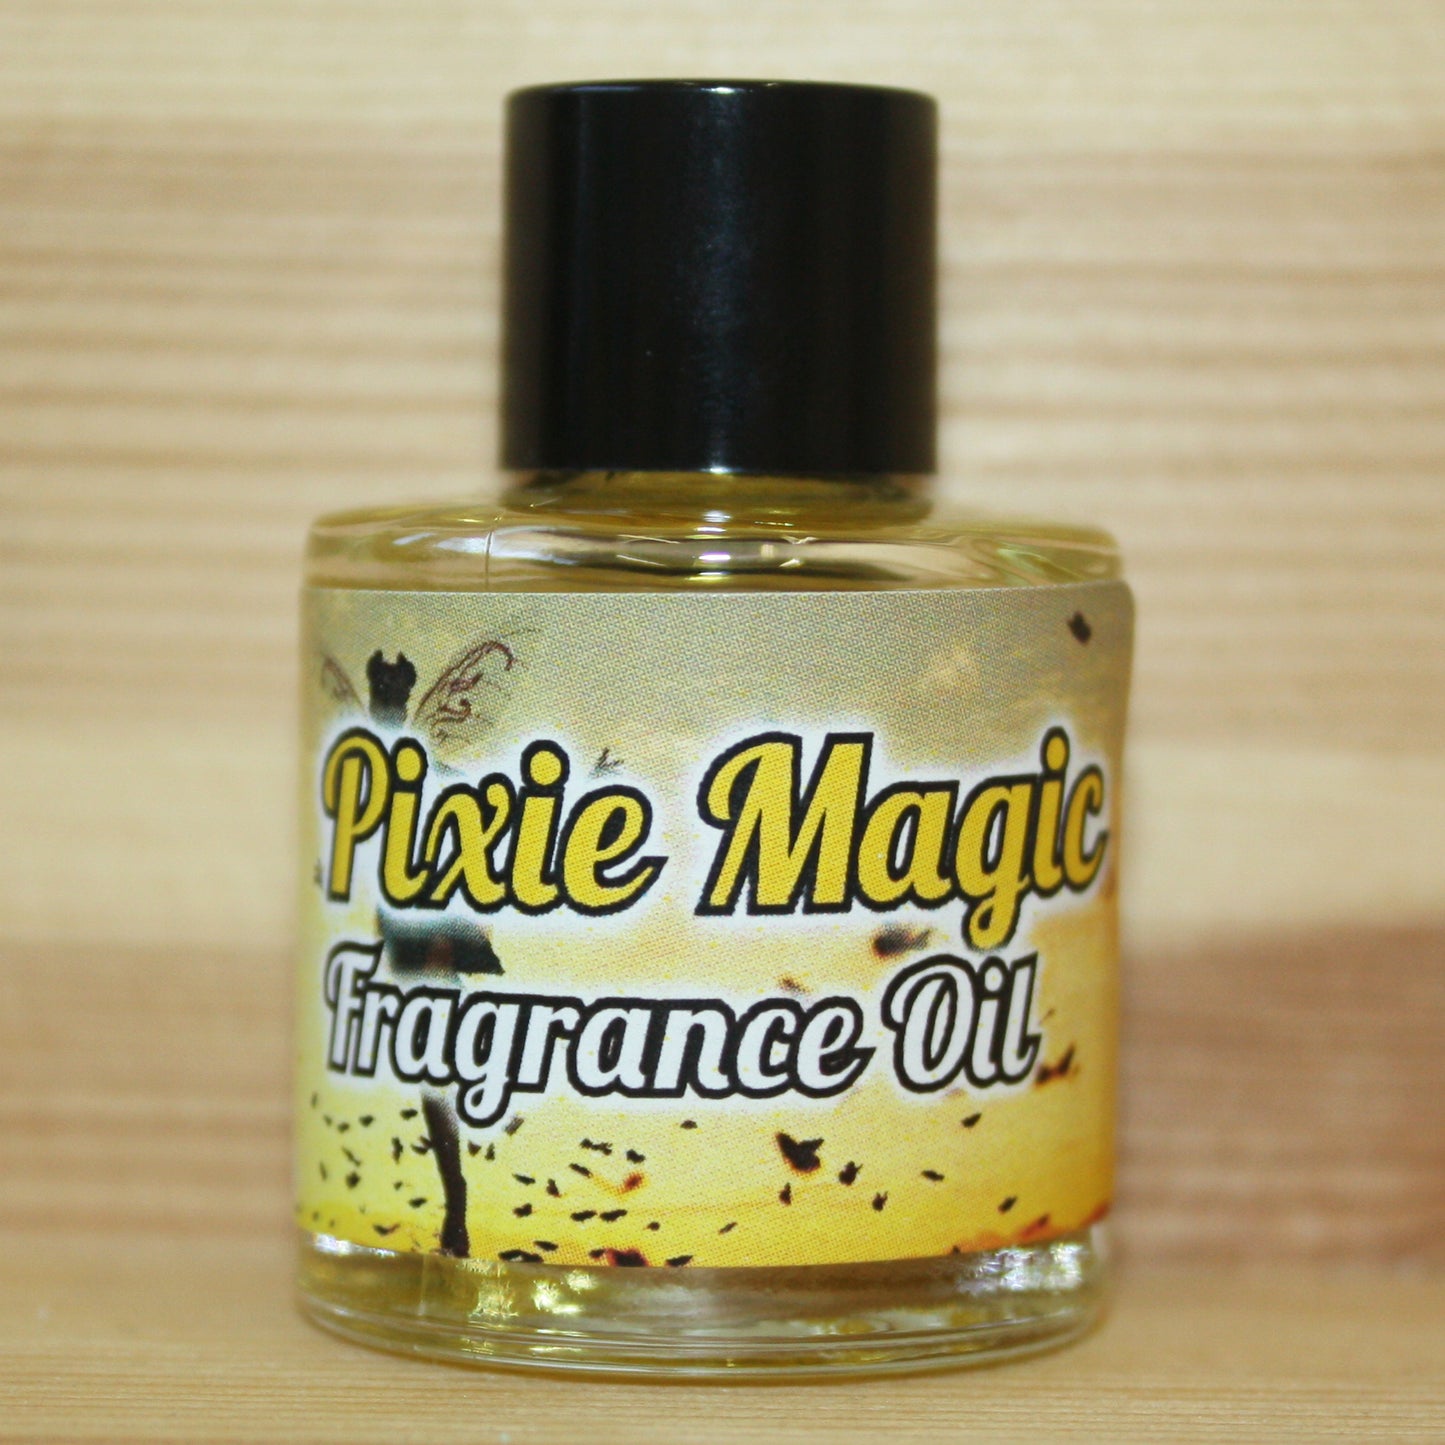 Pixie Magic Fragrance Oil